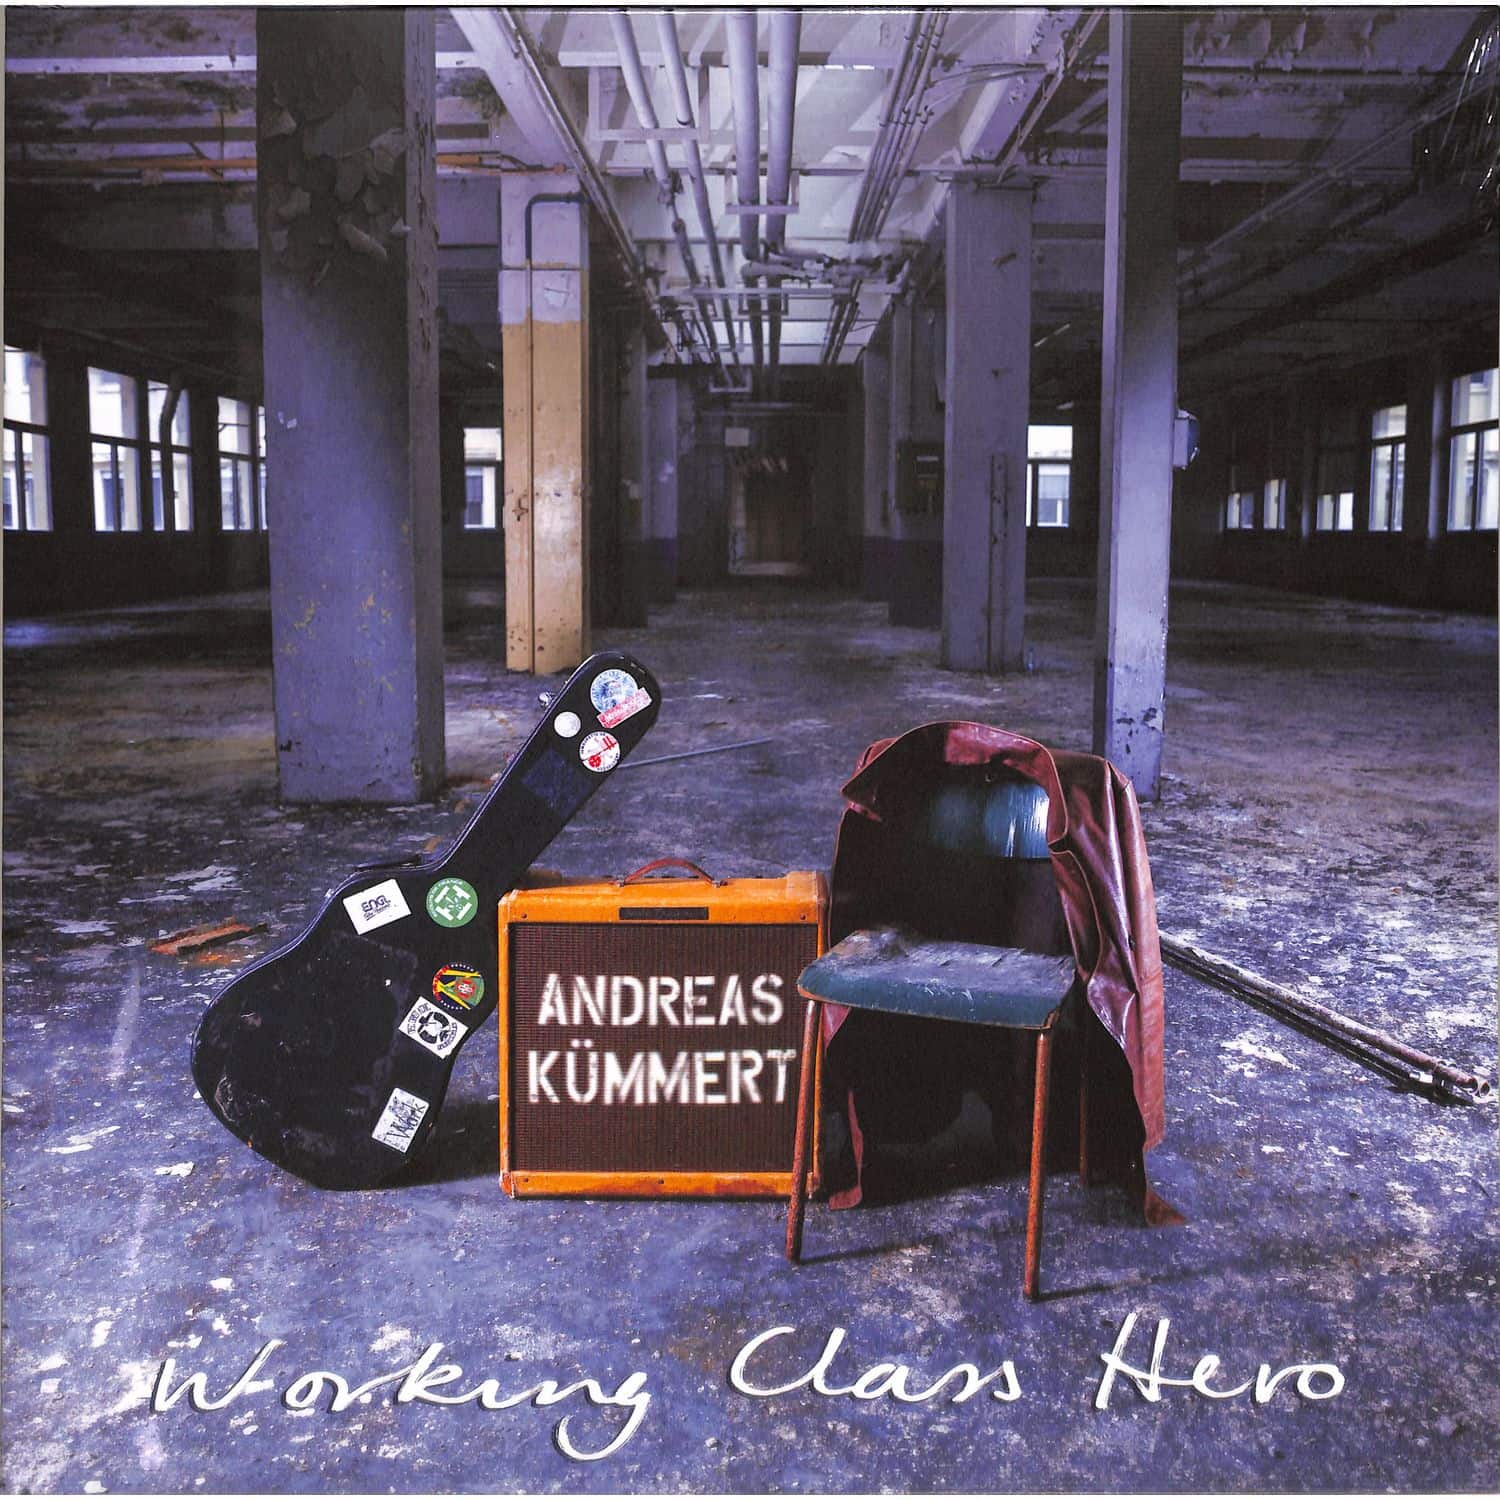  Andreas Kmmert - WORKING CLASS HERO 